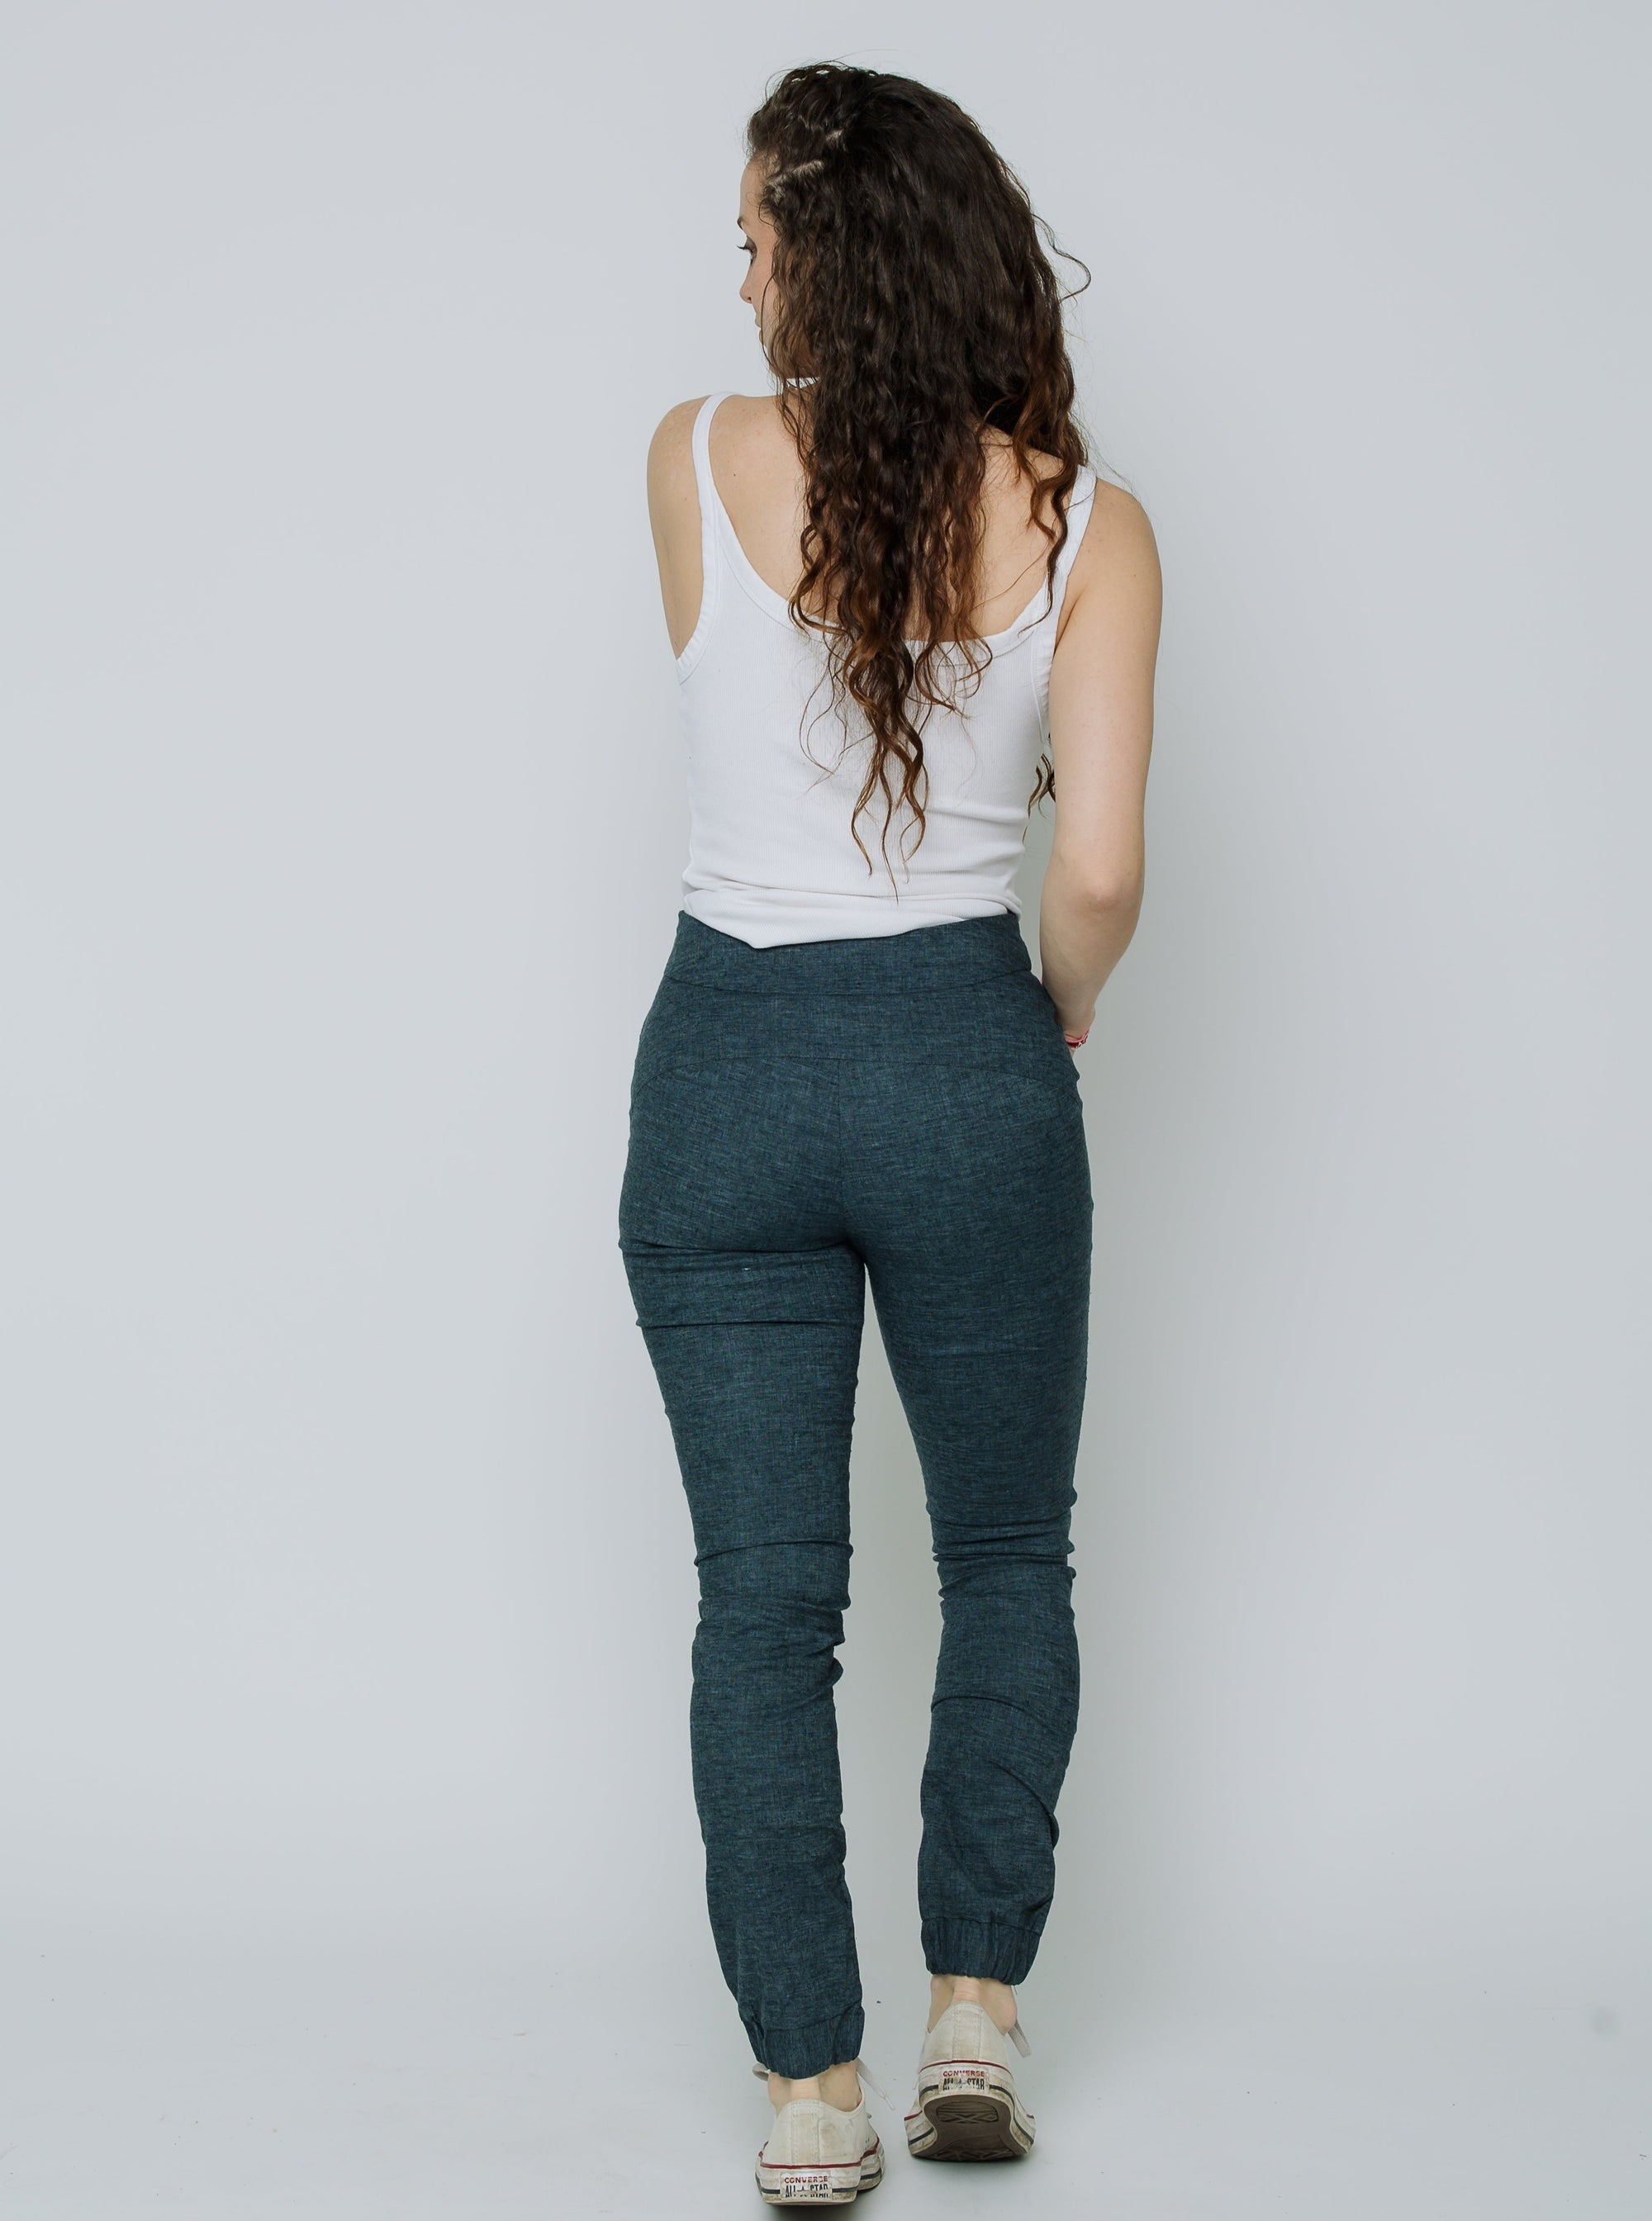 Kristina Cuffed Pants (Navy / Grey Hemp)